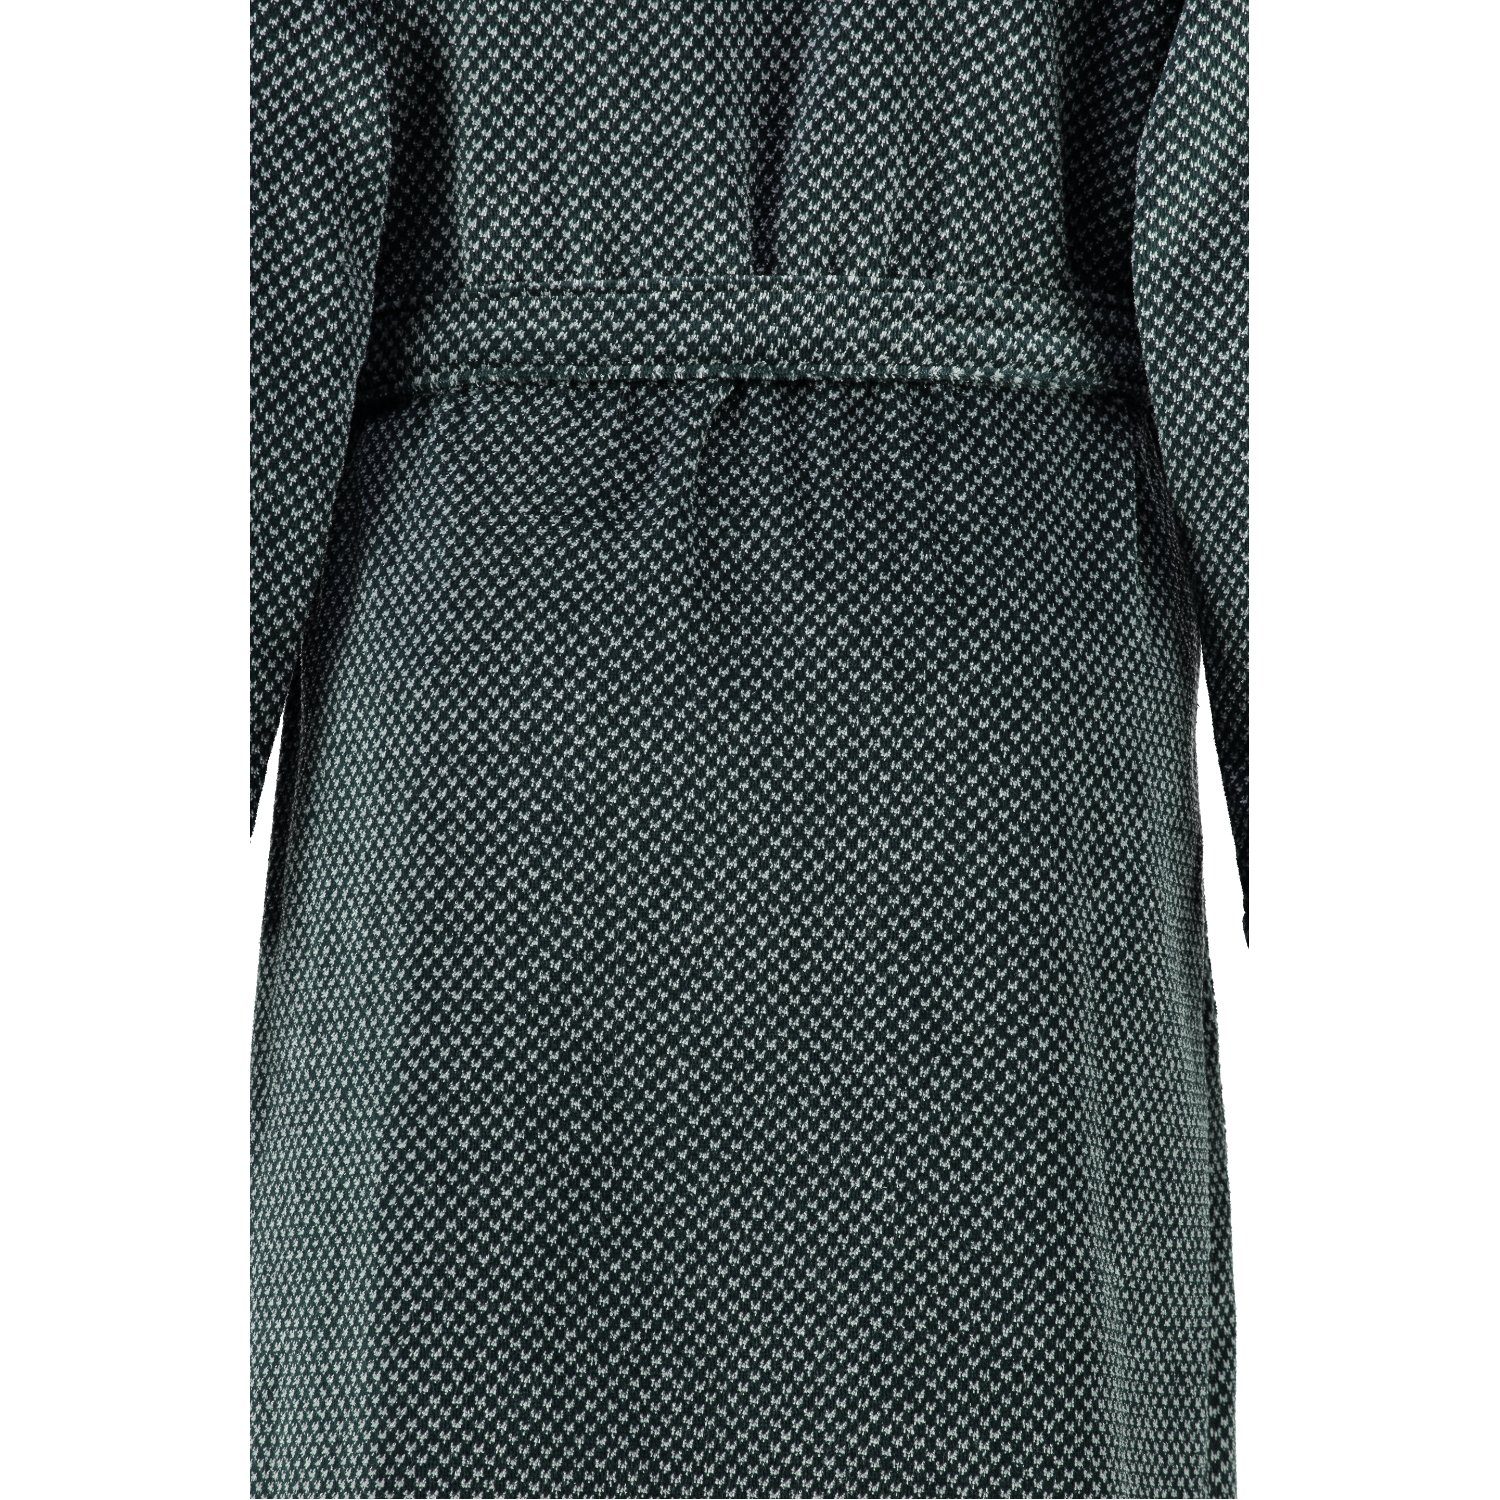 Gürtel, Herrenbademantel Langform, Baumwolle, 4839, Form 79 silber Cawö Kimonoform, Kimono schwarz